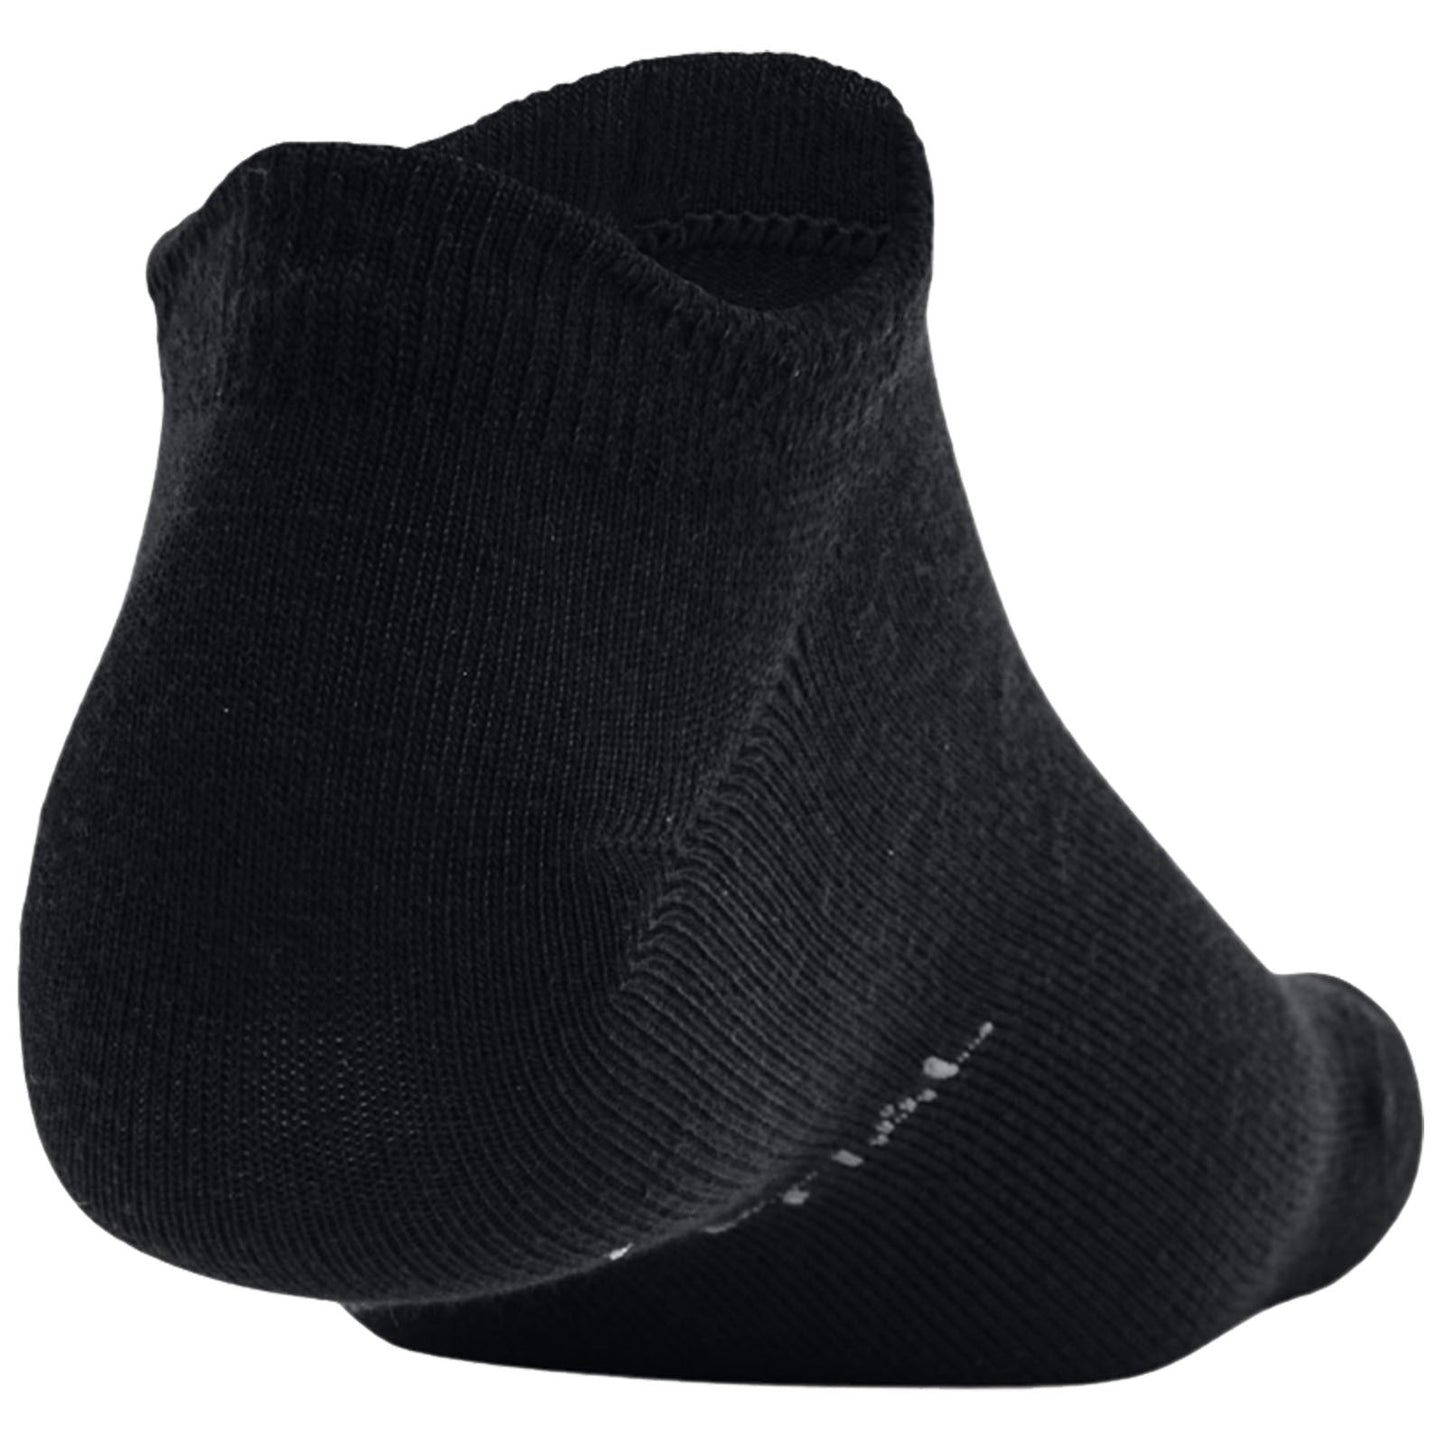 Under Armour Unisex Essential No-Show Socks (6 Pairs)